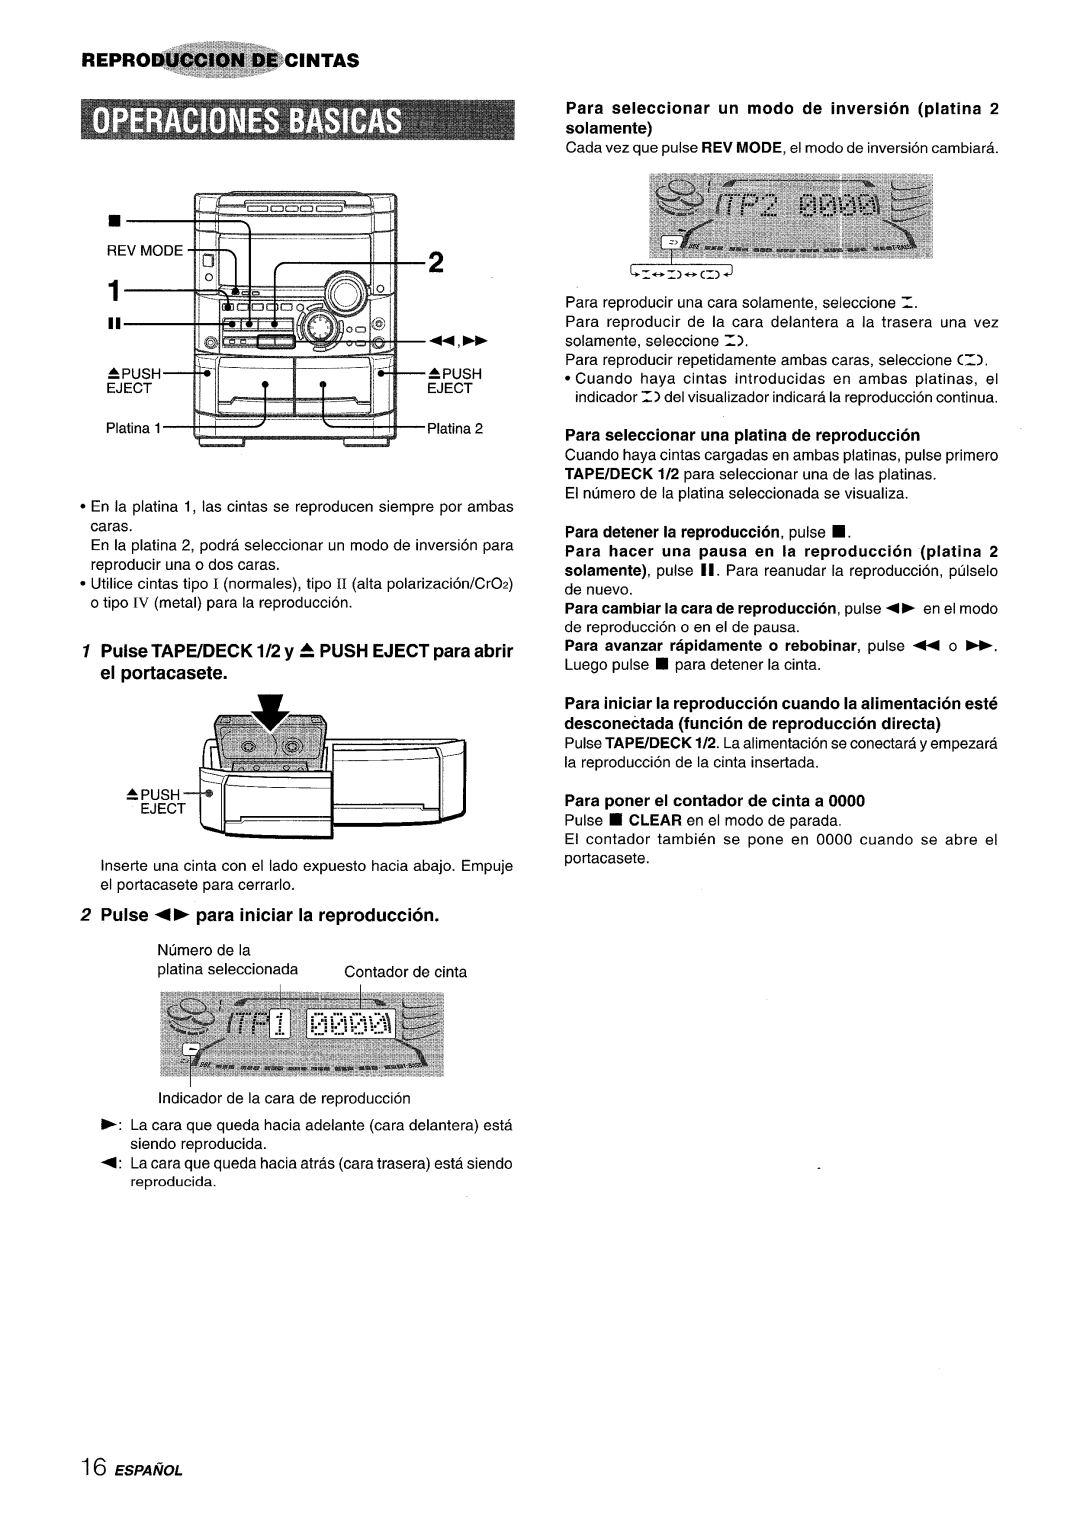 Sony NSX-A777 manual Pulse TAPE/DECK 1/2 y A PUSH EJECT para abrir el portacasete, Pulse P para, iniciar, la reproduction 